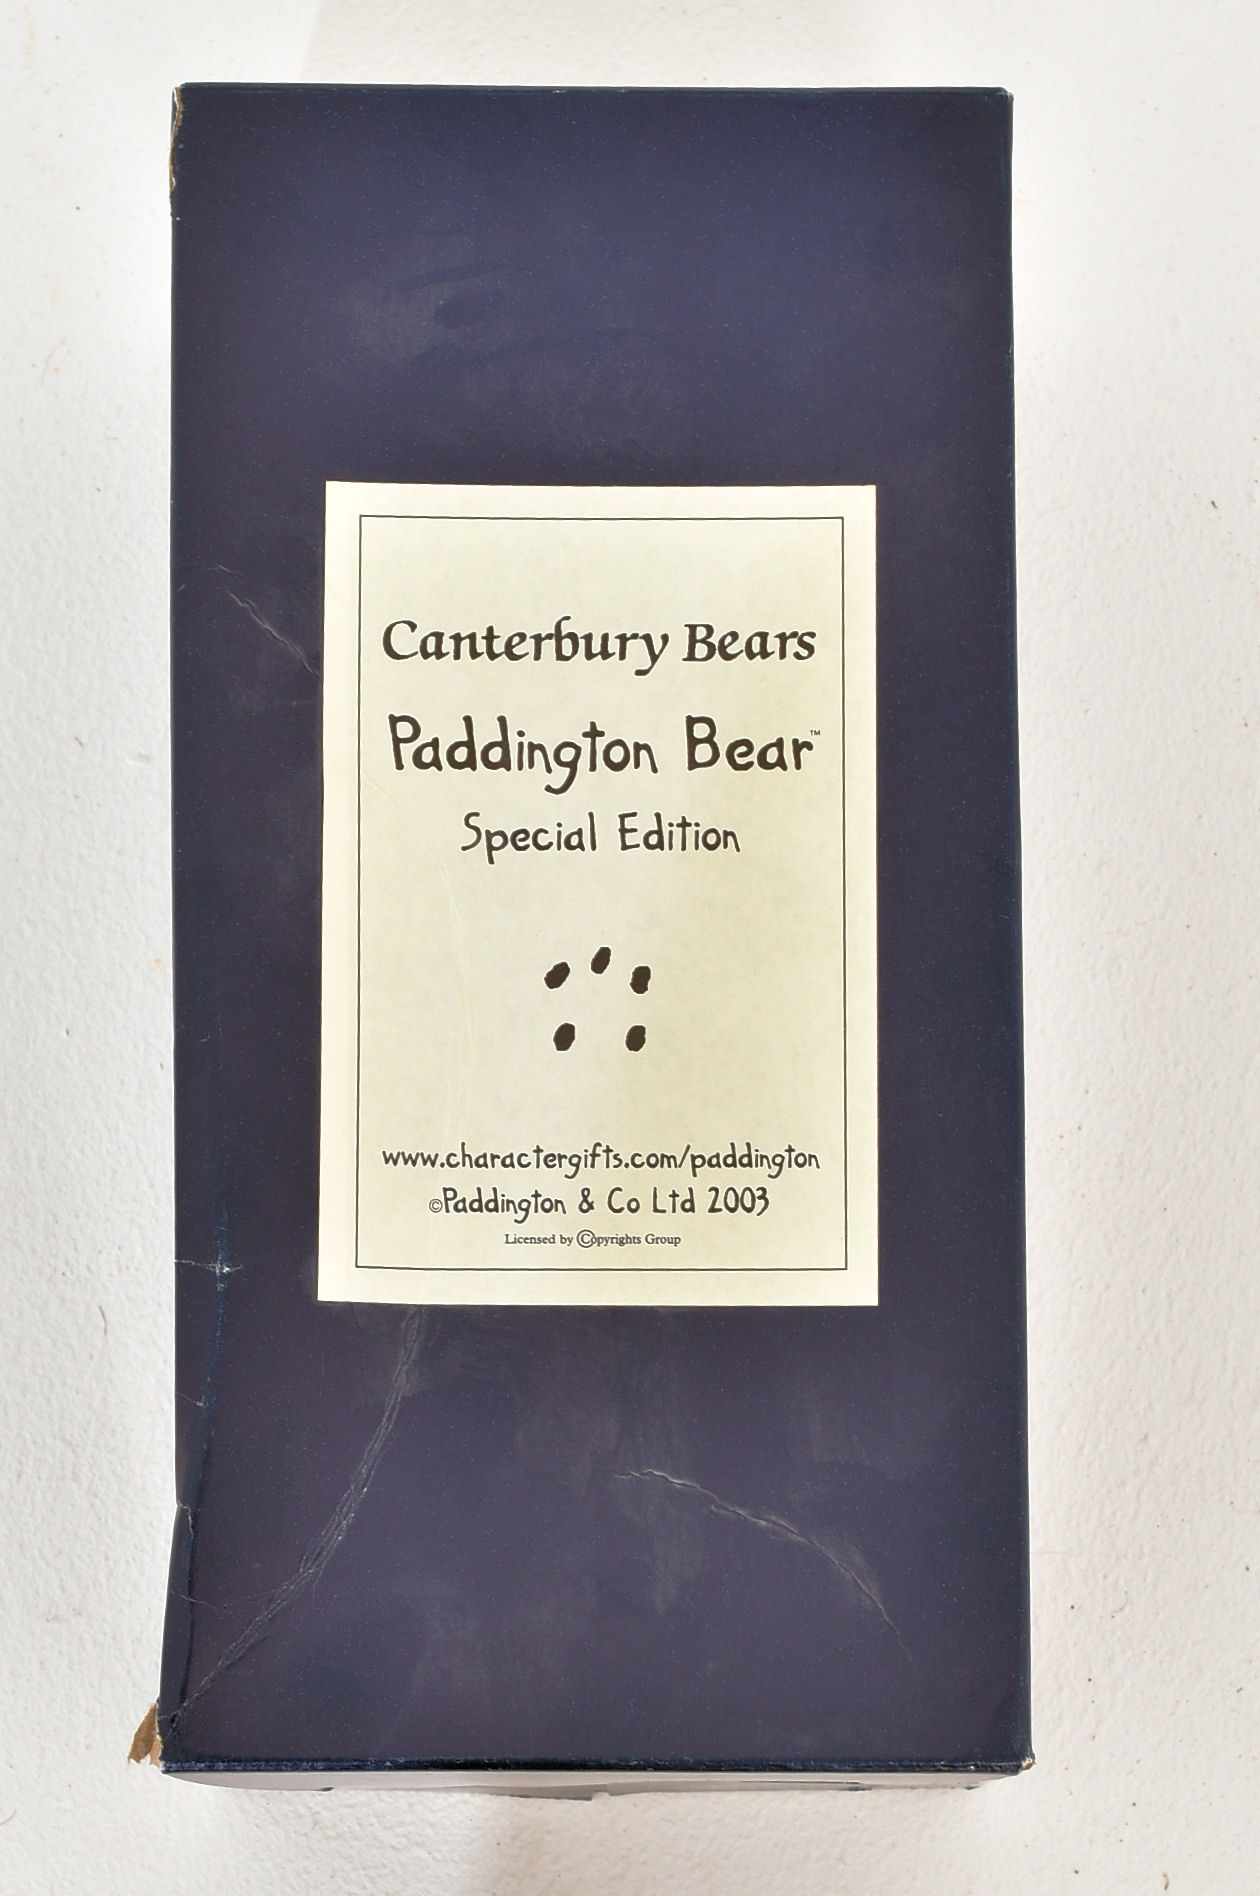 A Boxed Special Edition Paddington Bear Teddy Bear - Image 4 of 4